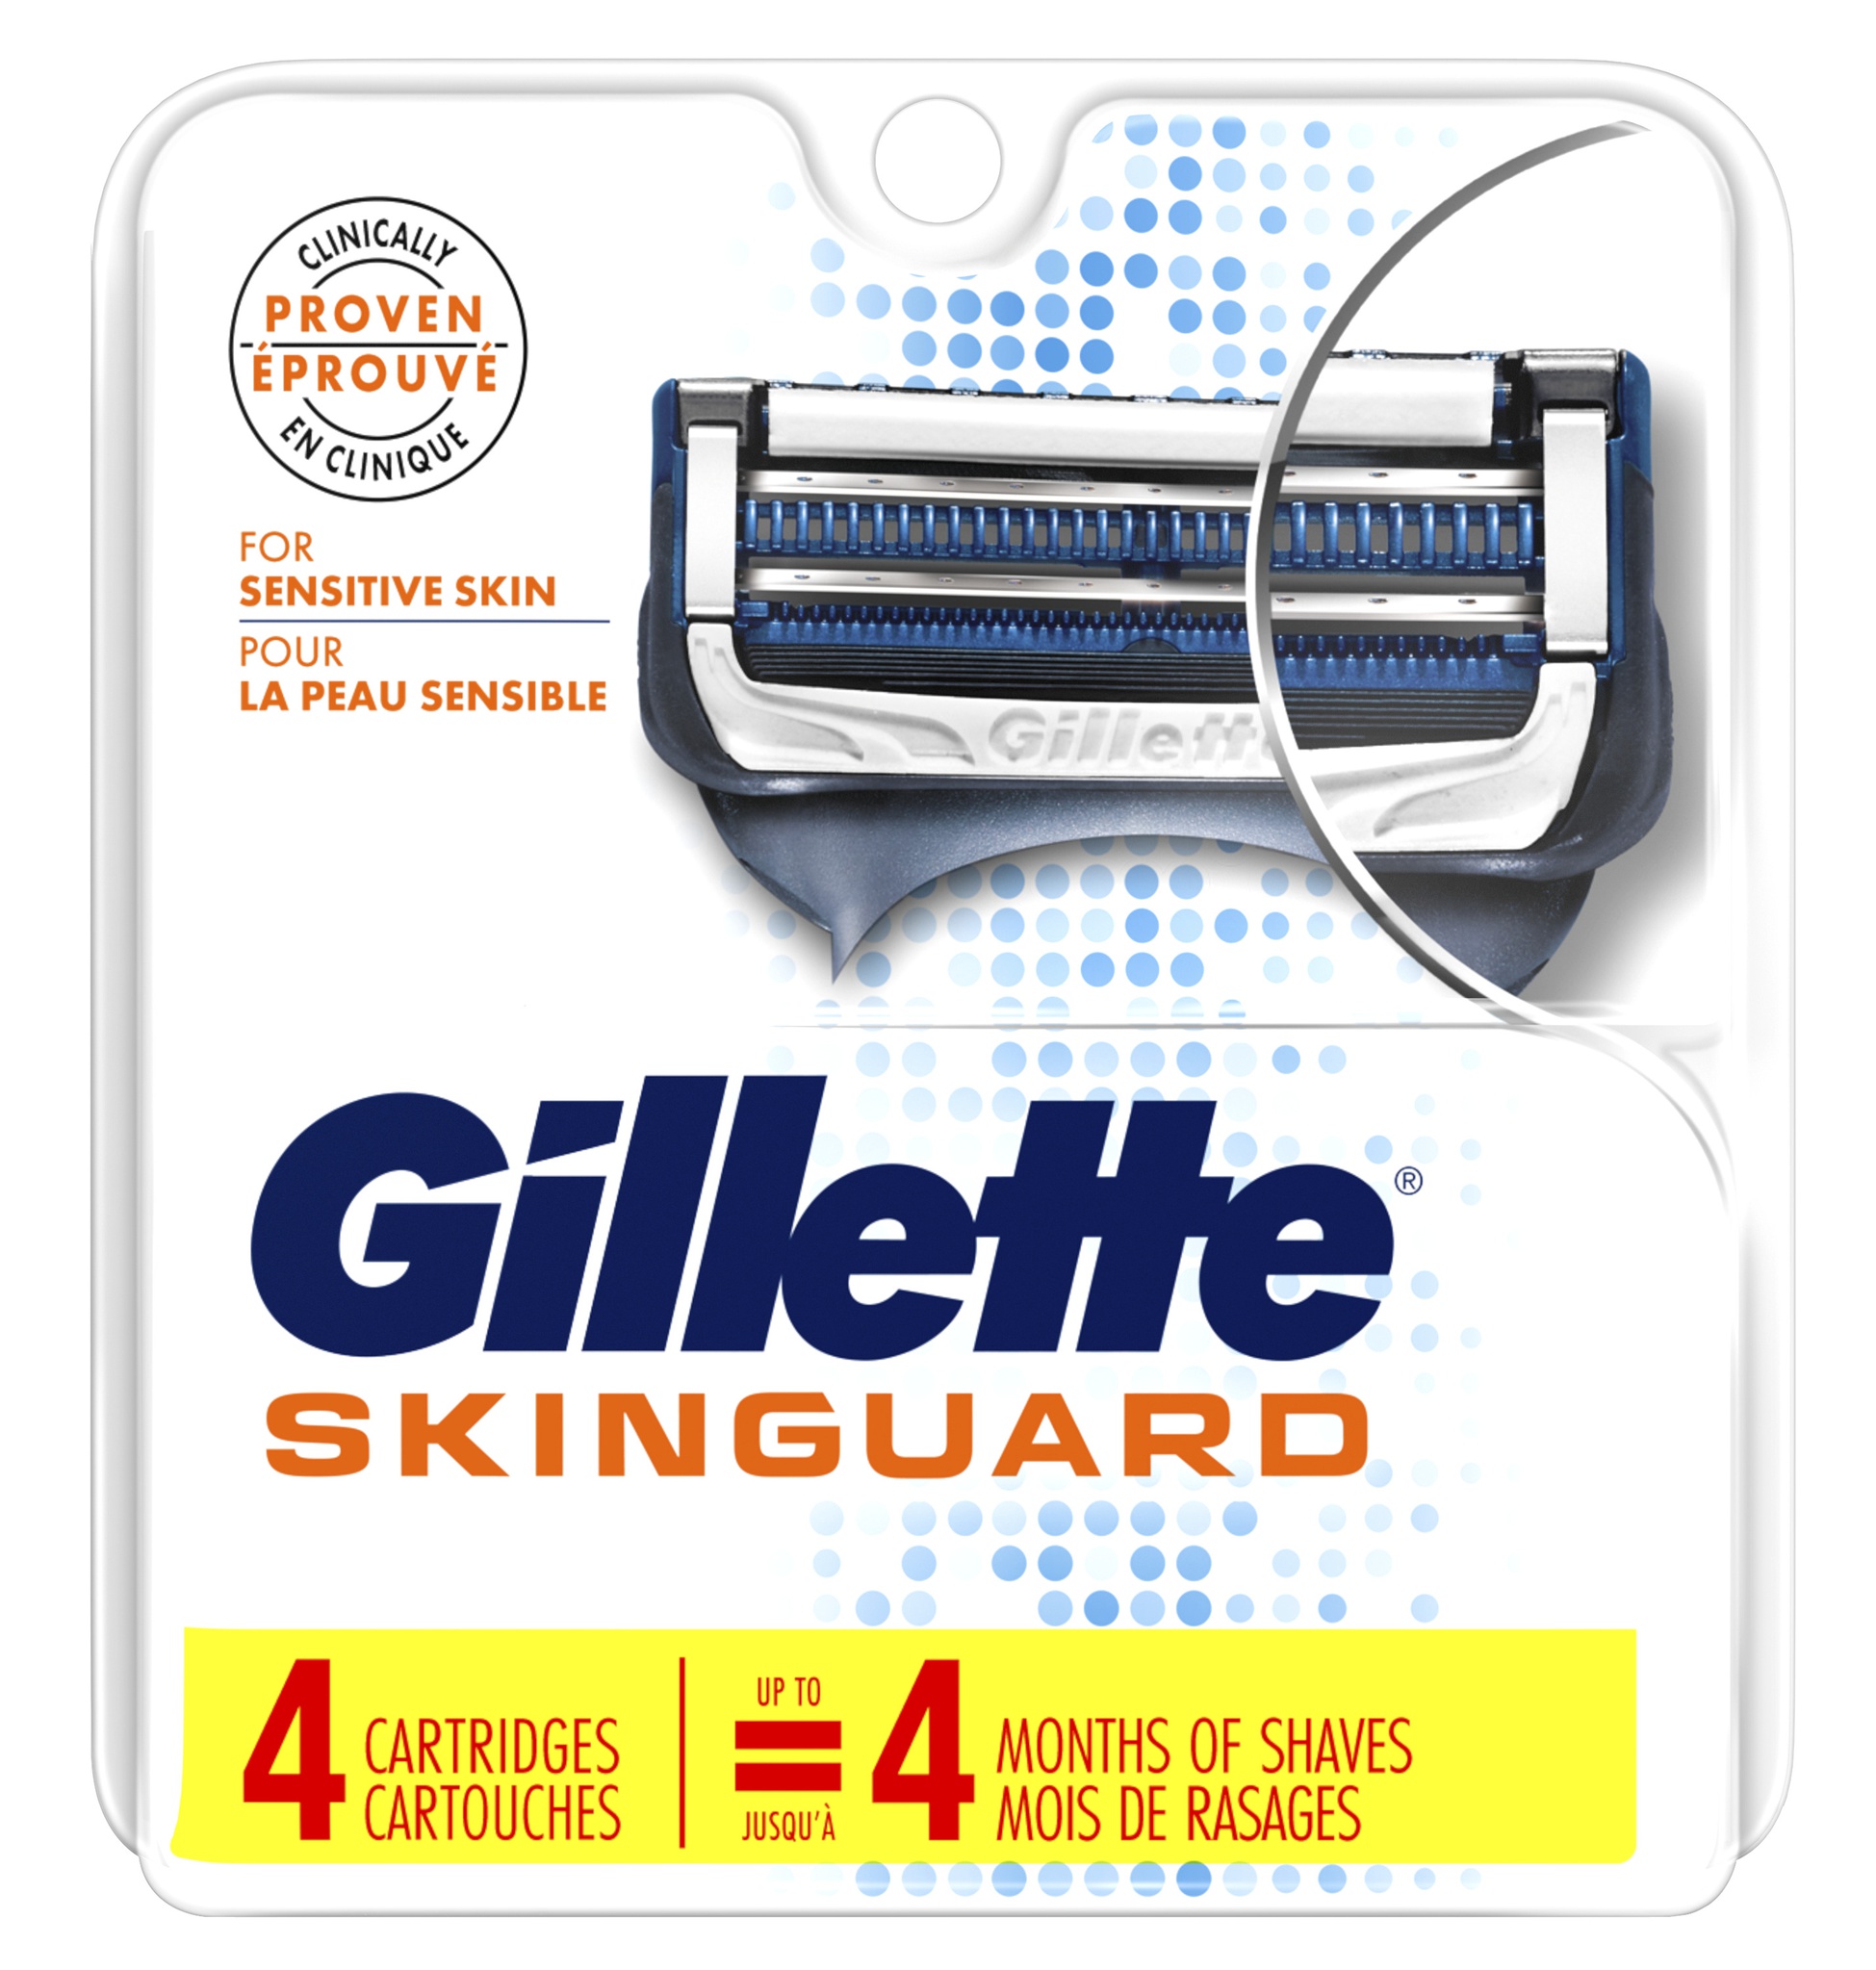 Gillette Skinguard Razors